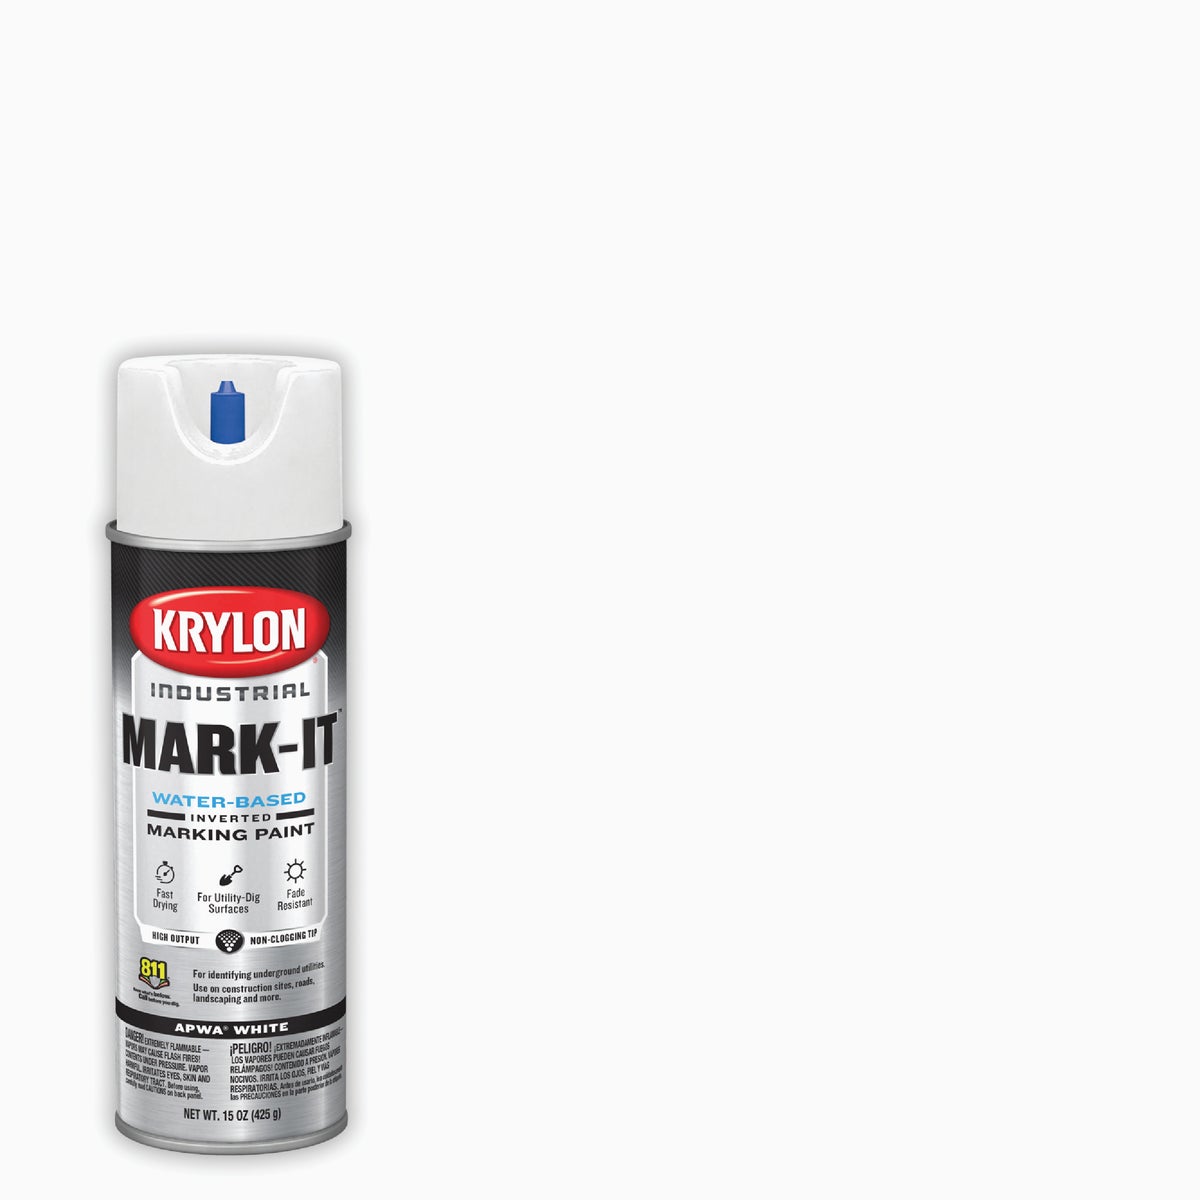 Krylon Mark-It 731608 Industrial WB APWA Brilliant White Inverted Marking Paint